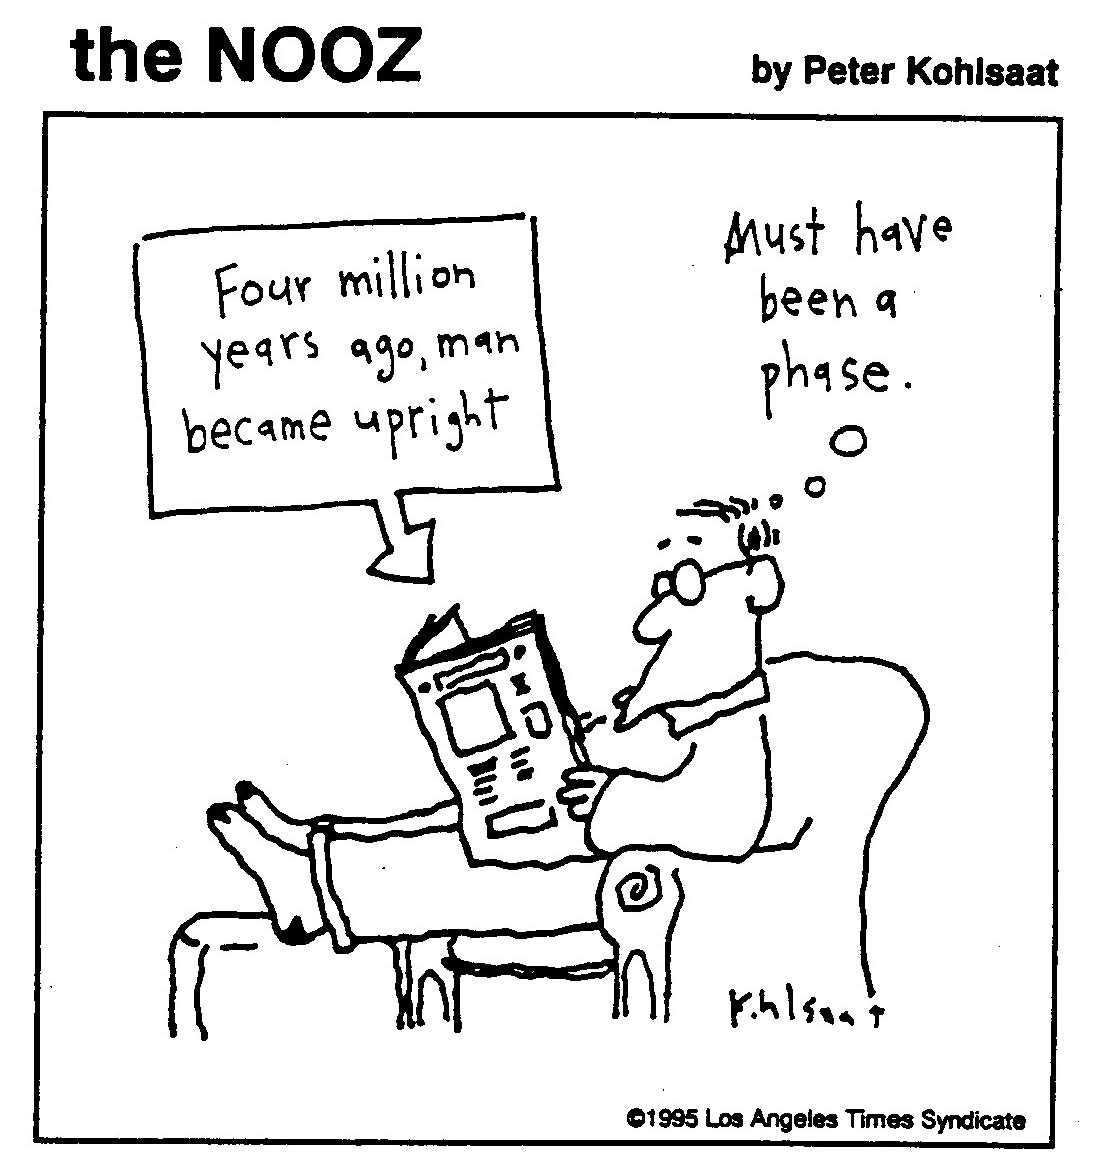 The NOOZ